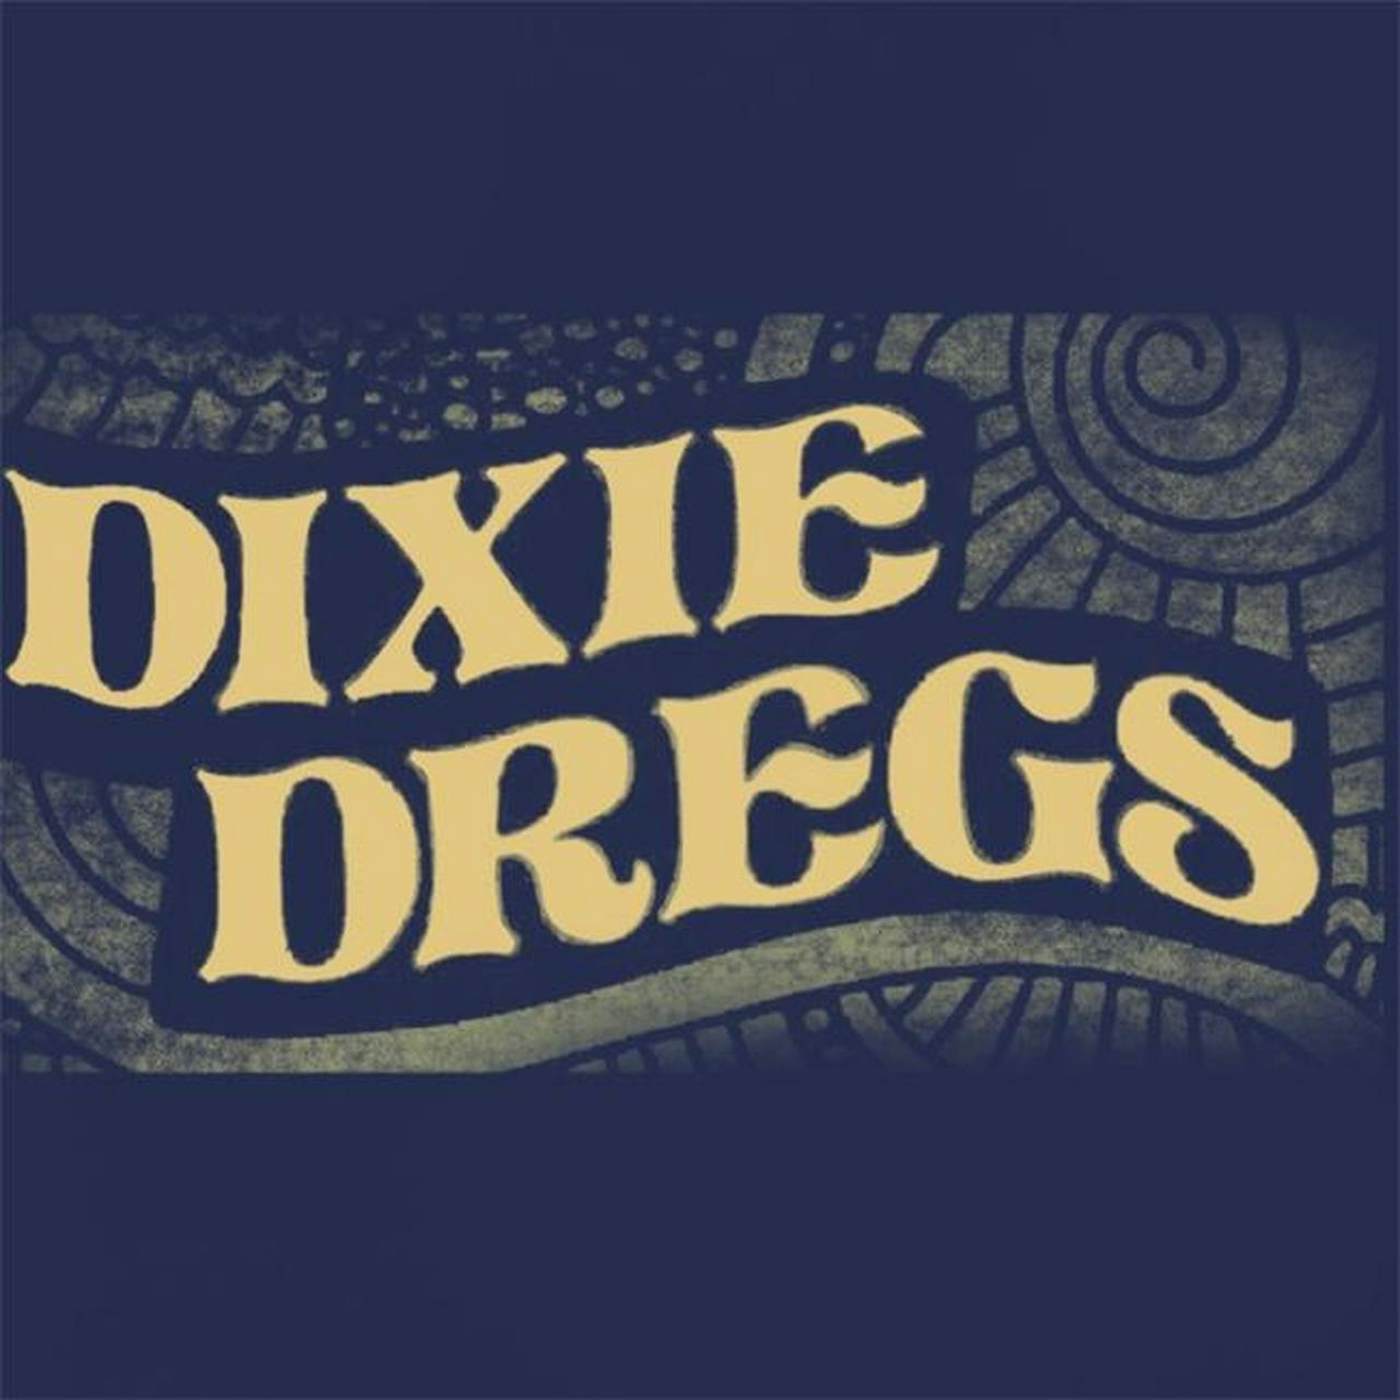 Dixie Dregs Vintage Logo Tee